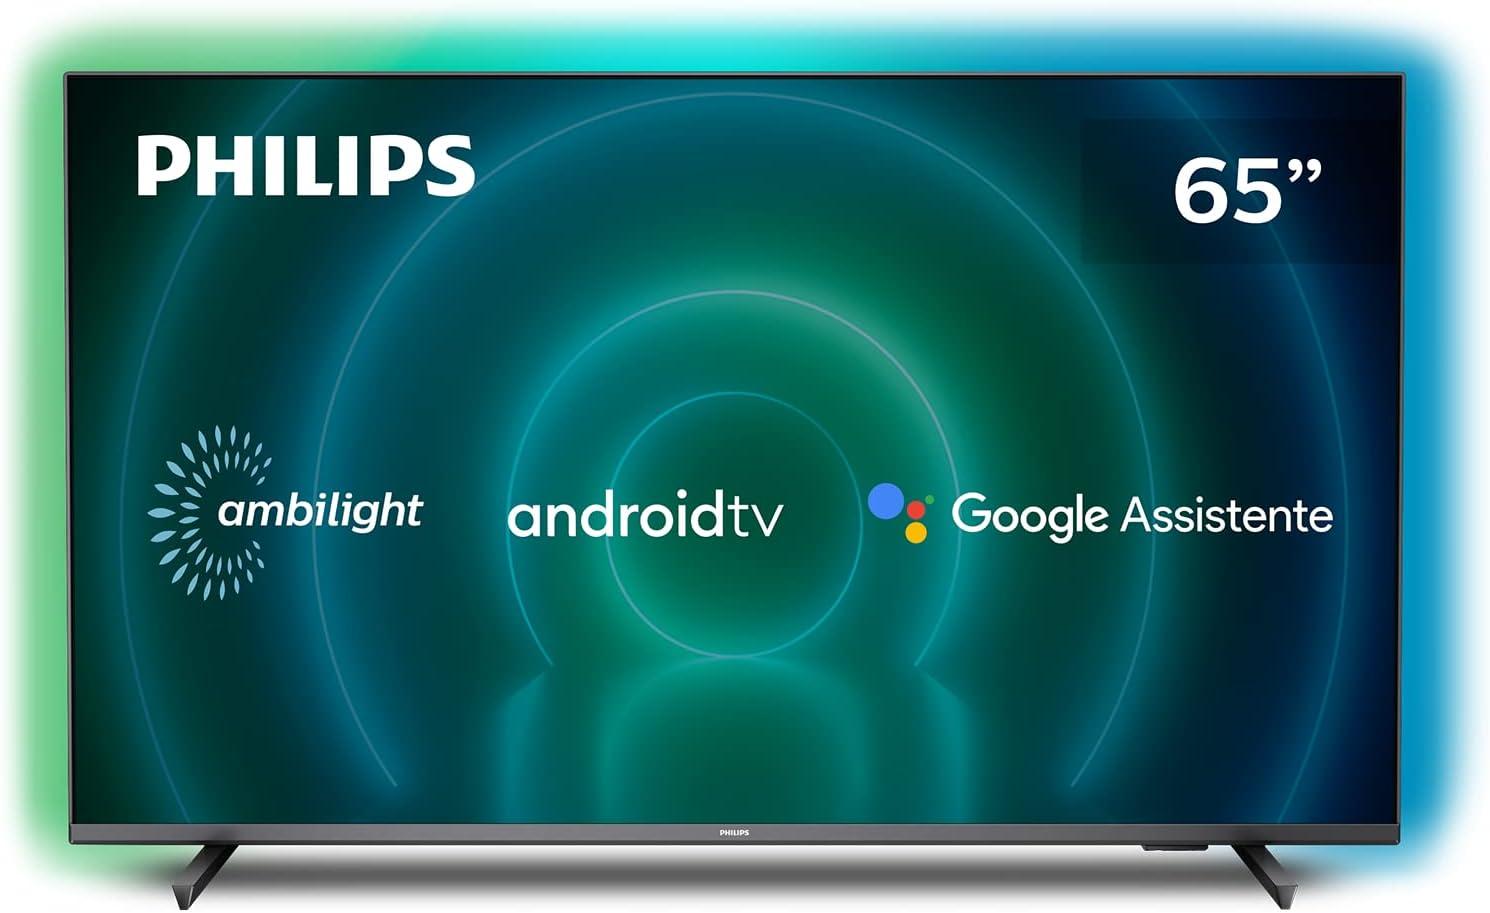 philips-android-tv-ambilight-65-4k-65pug790678-google-assistant-built-in-comando-de-voz-dolby-visionatmos-vrrallm-bluetooth-50 - Imagem